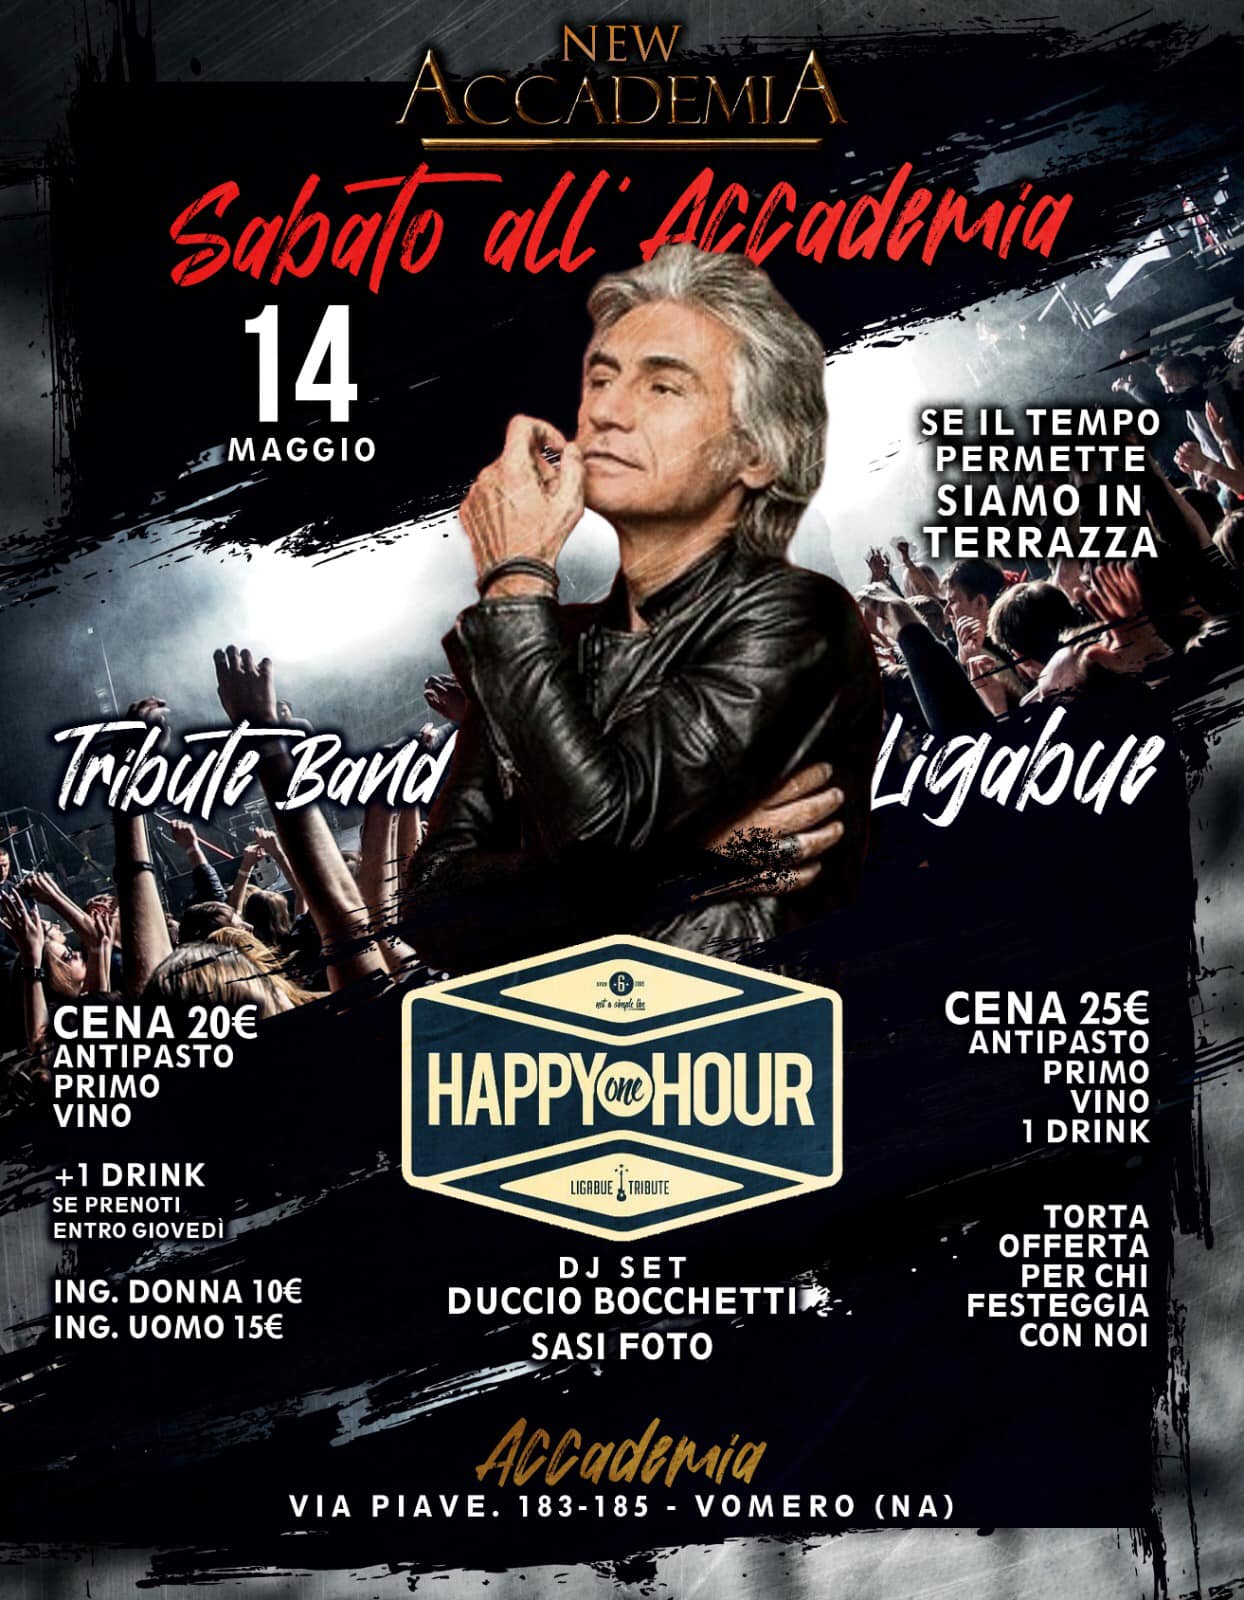 Ligabue Tribute Band Live all’Accademia Club